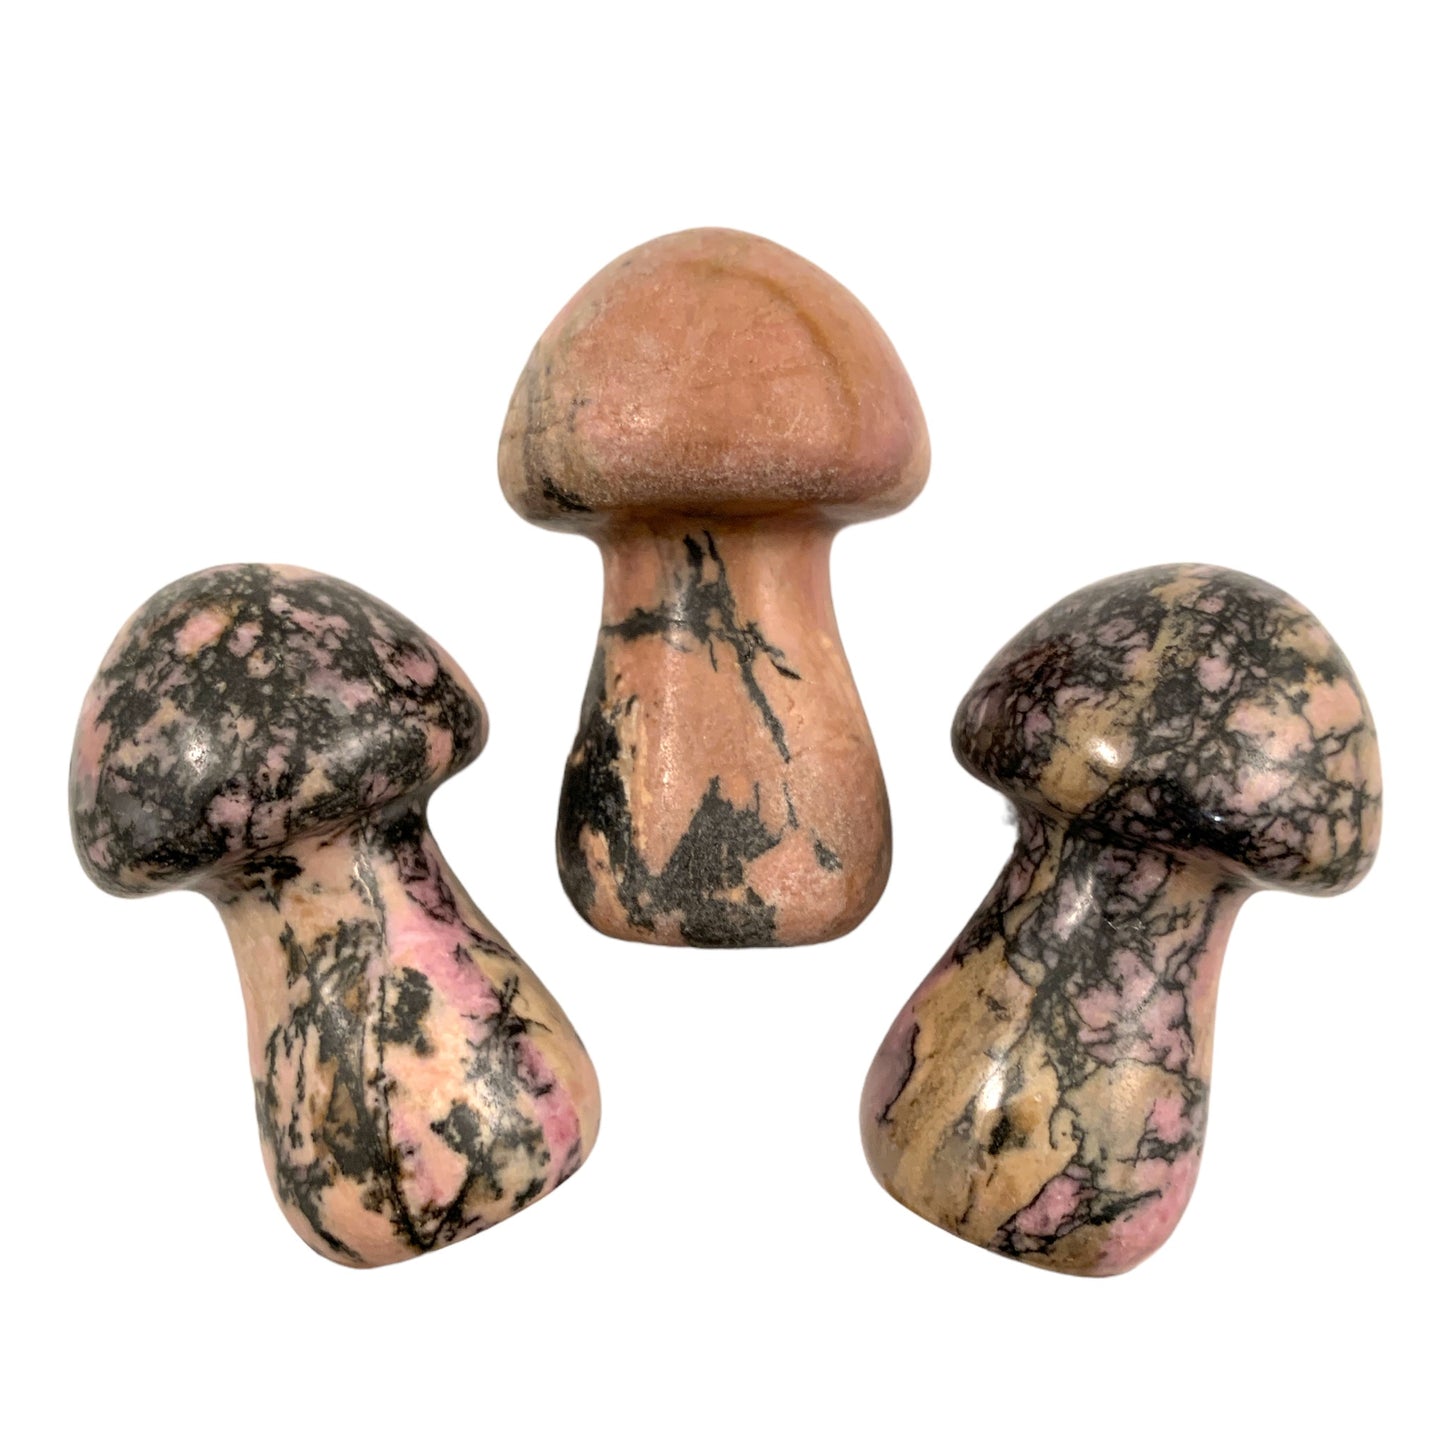 Mushrooms SMALL RHYOLITE - LLANITE - QUE SERA - 35mm - Price Each - China - NEW822